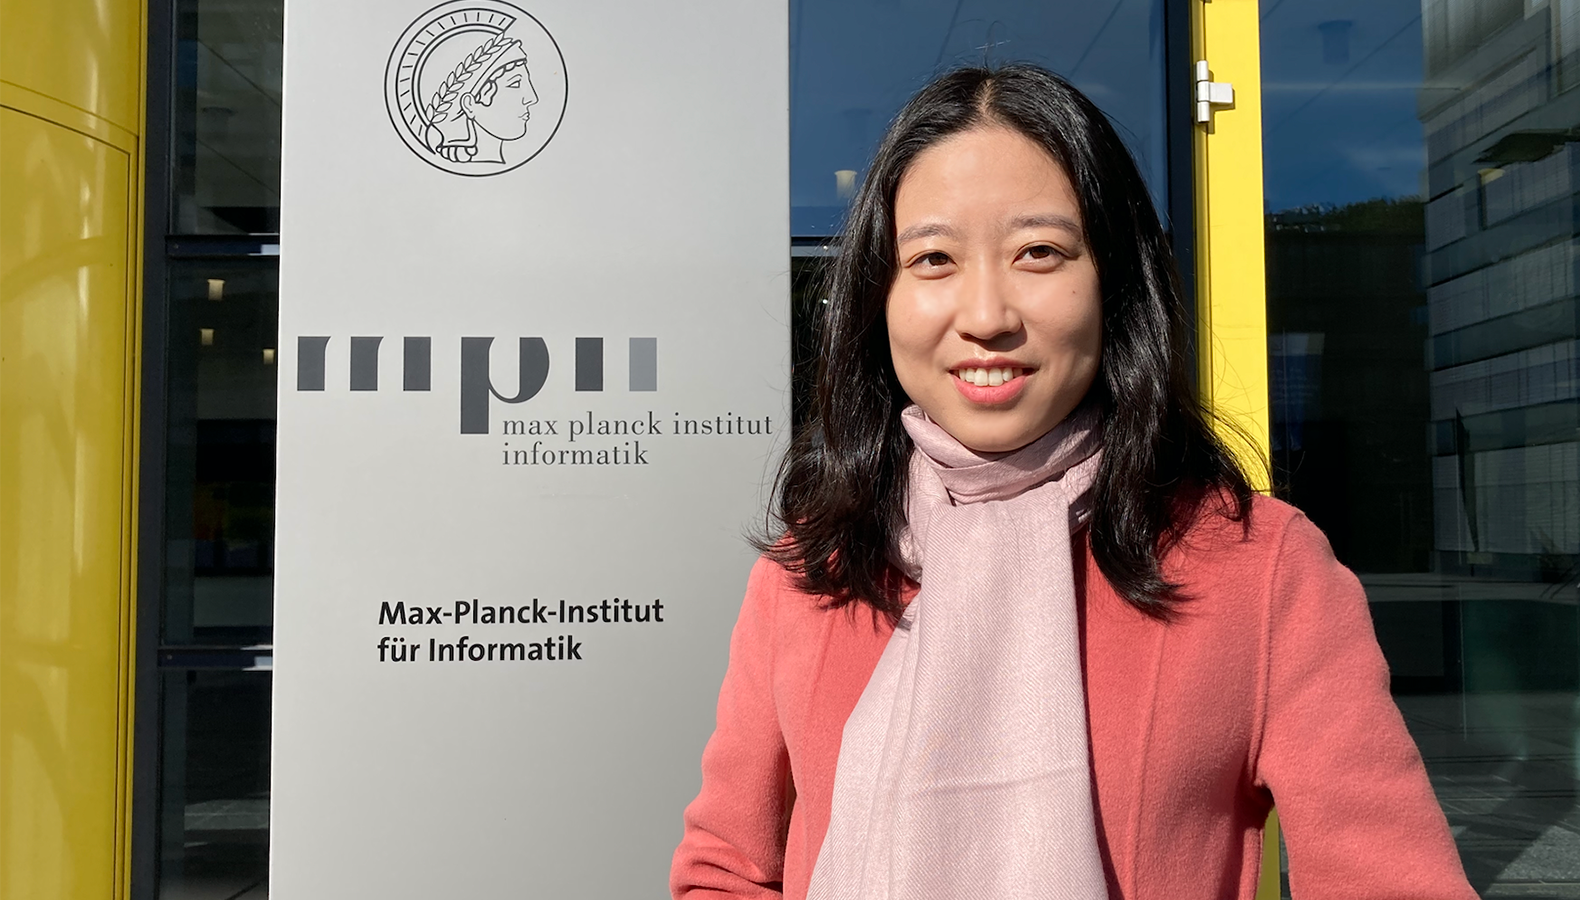 Rice CS alum Yiting Xia is now a Max Planck faculty member